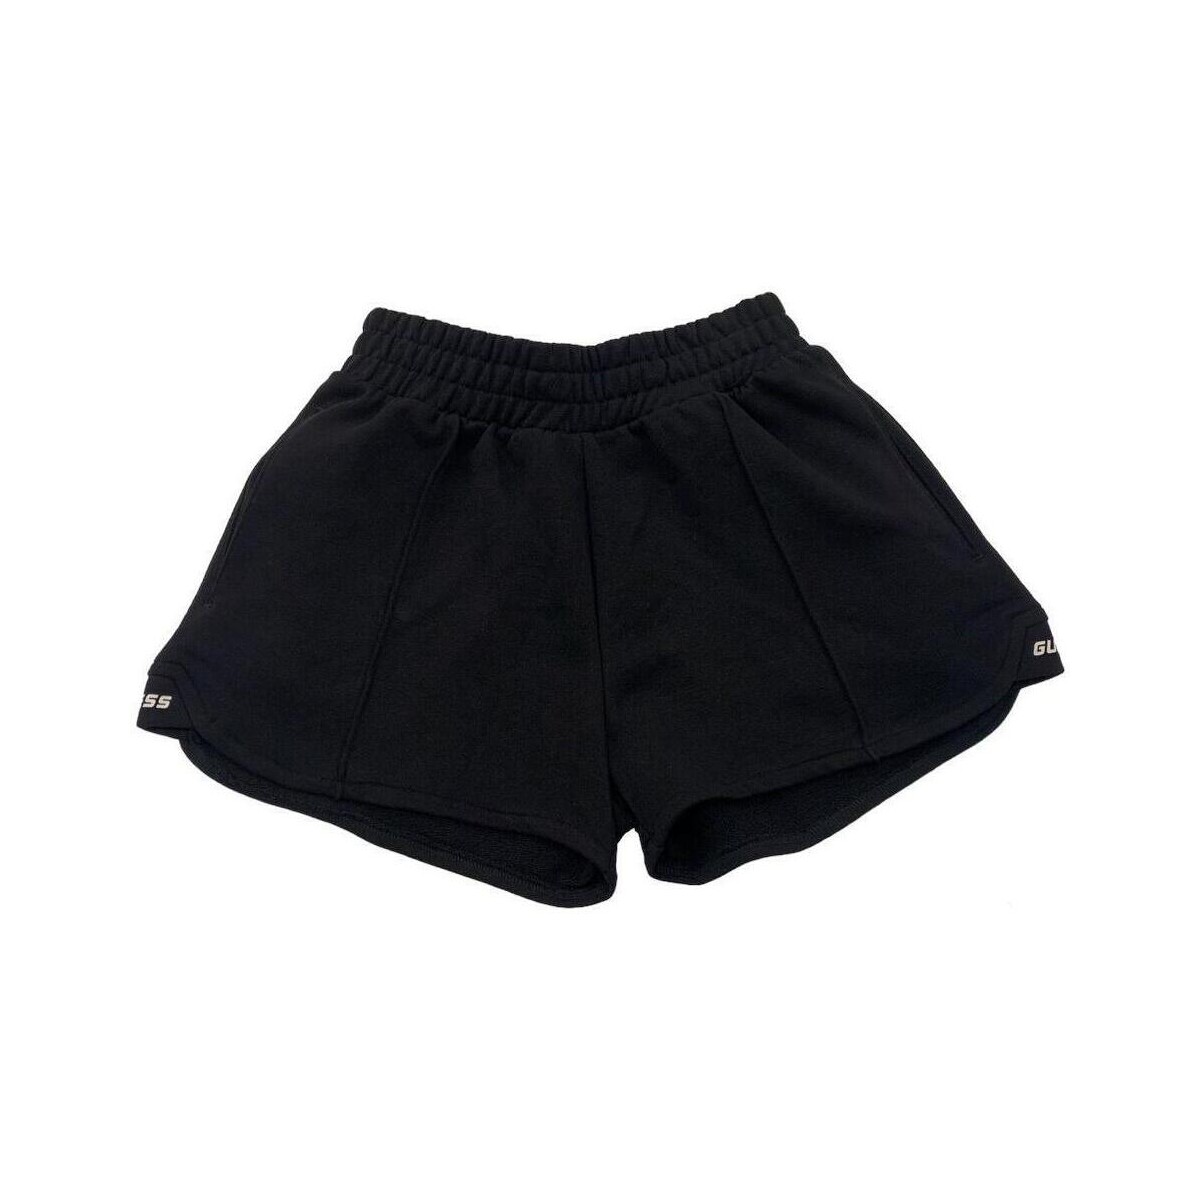 Vêtements Femme Shorts / Bermudas Guess  Noir